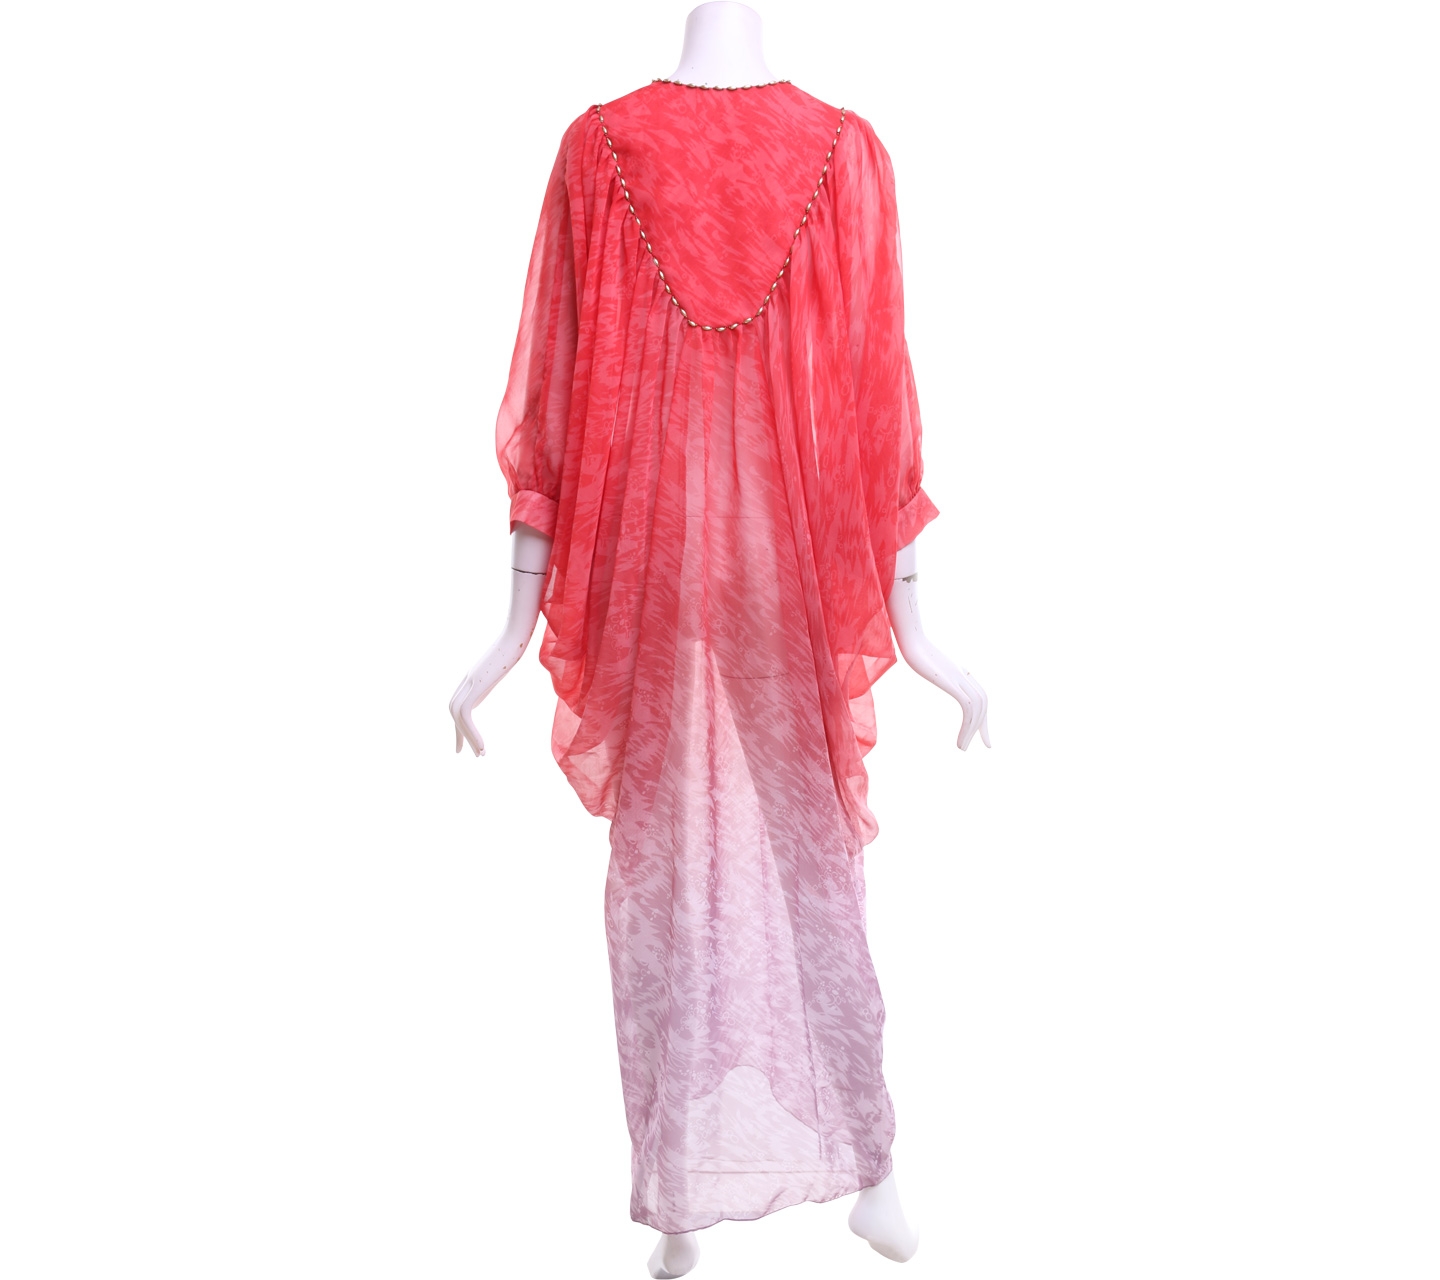 Eddy P Chandra Red & Lavender Batwing Long Dress